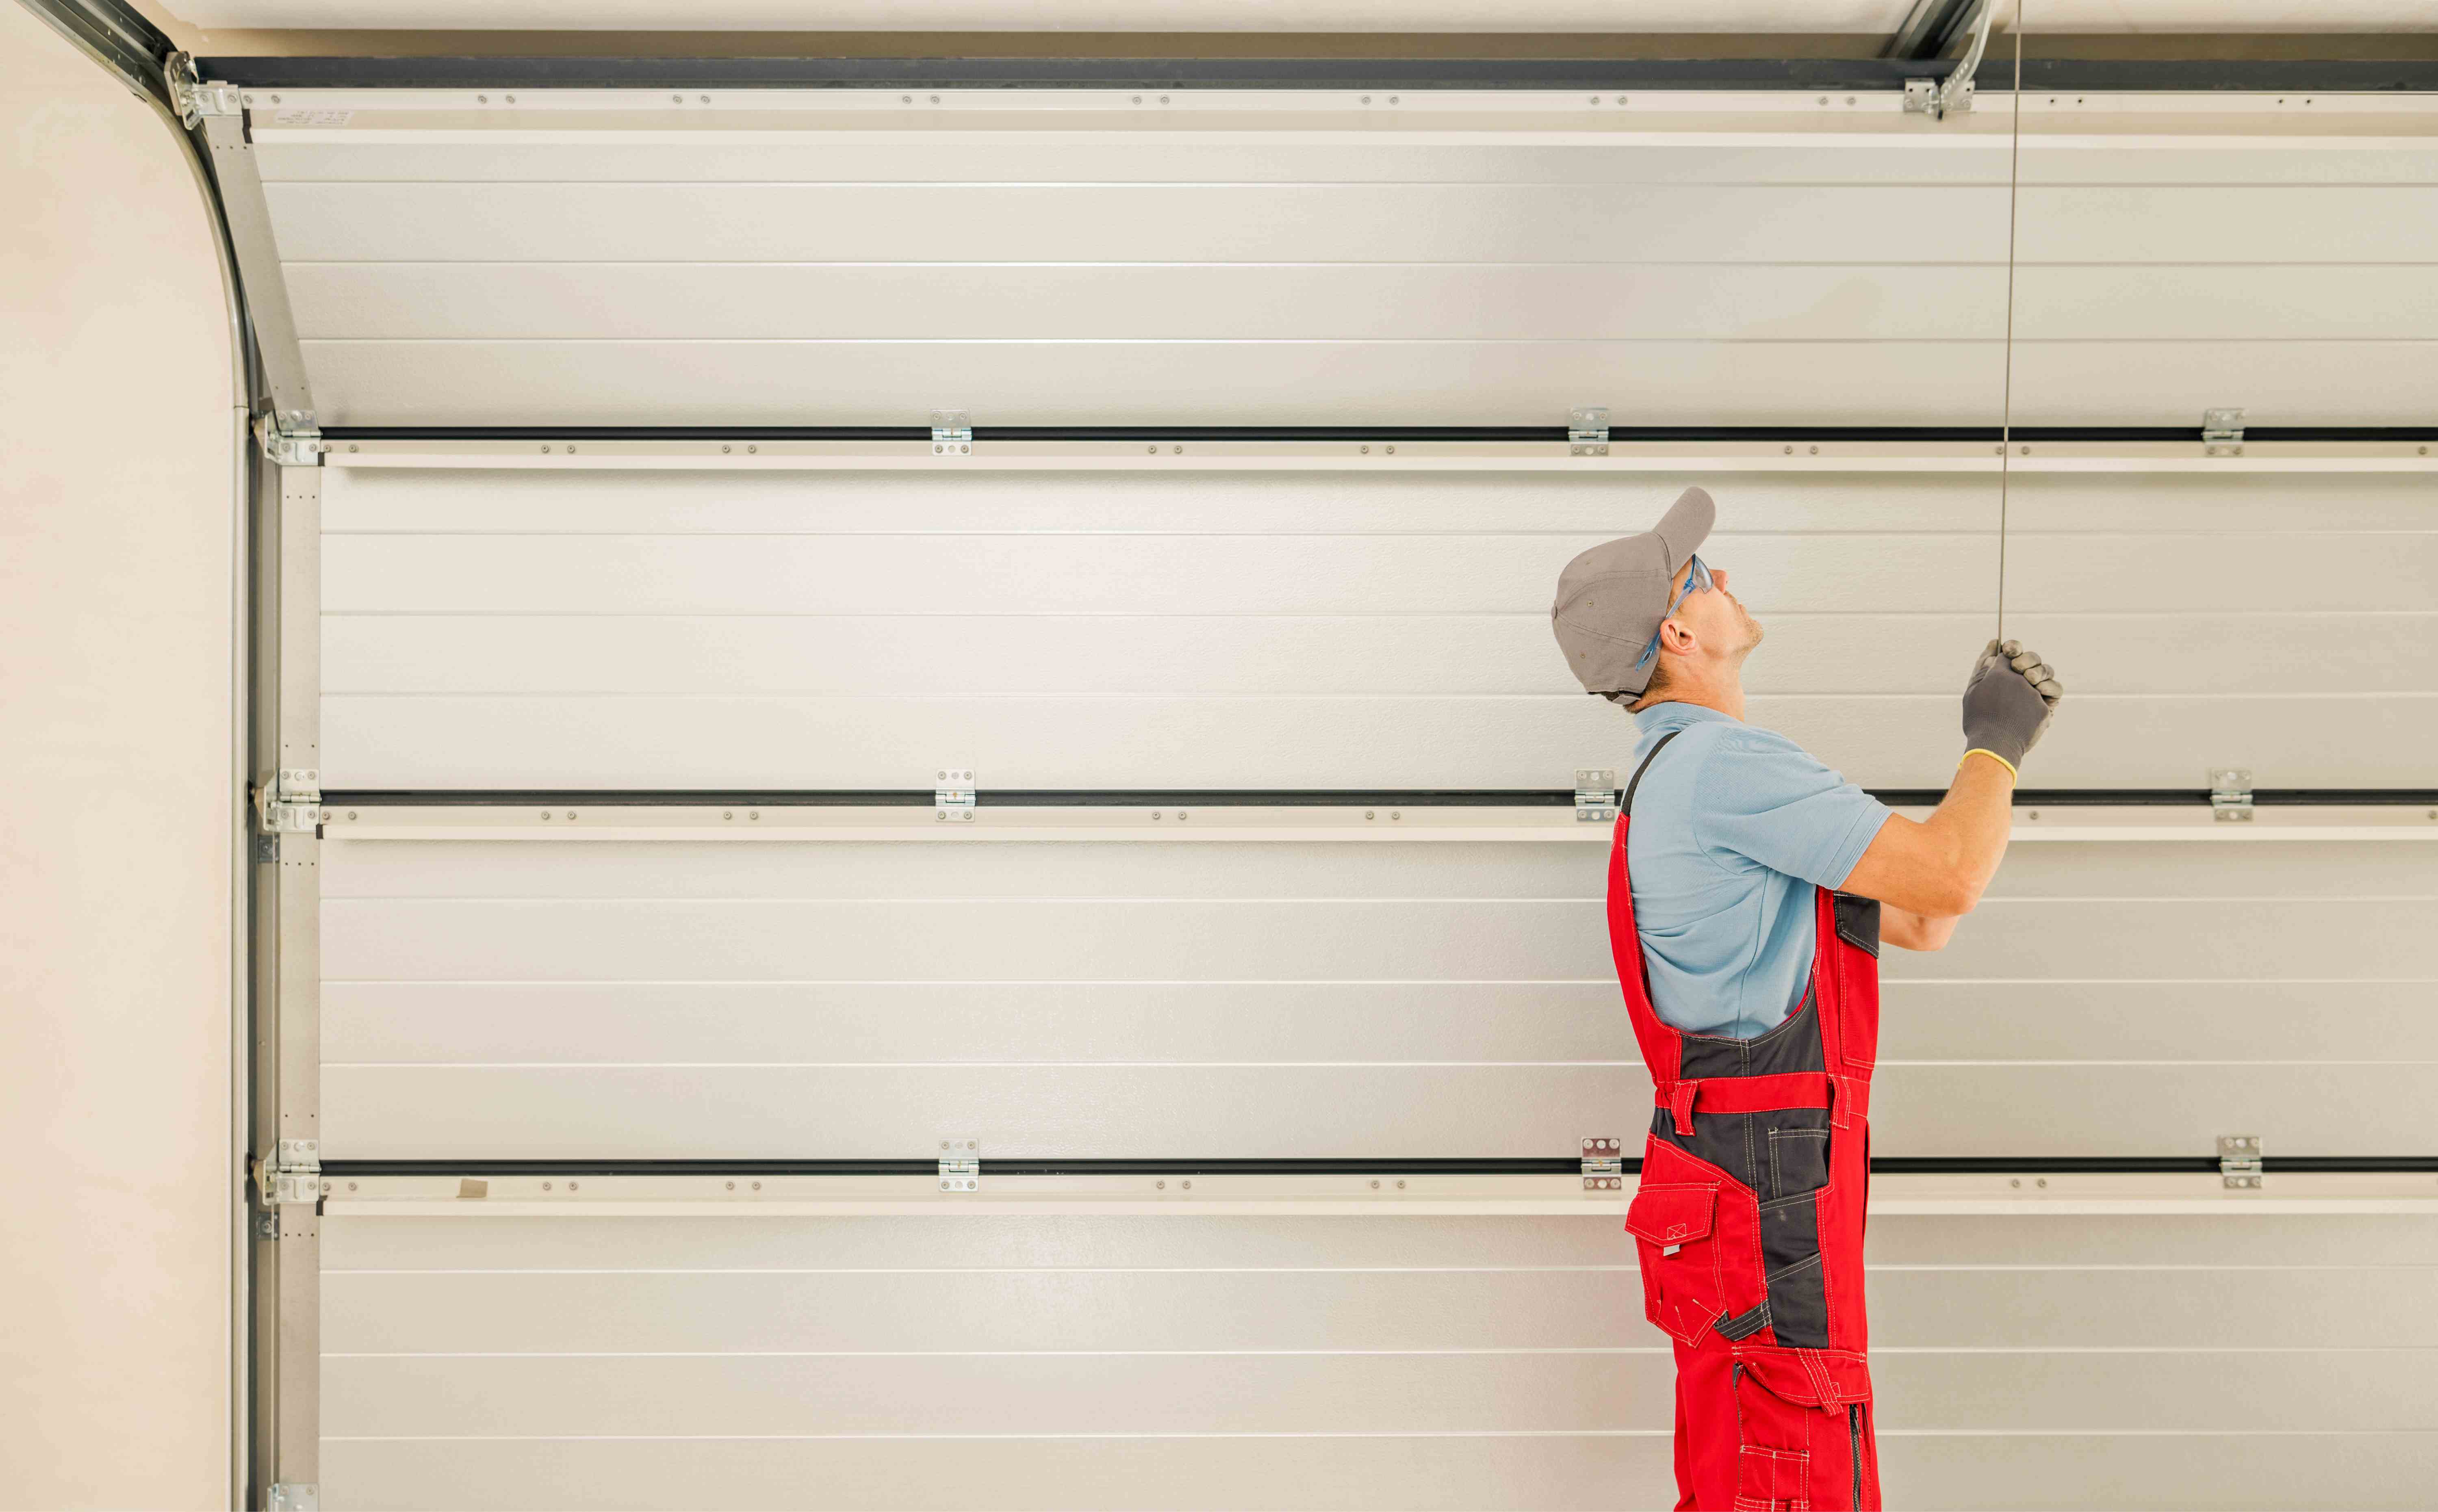 automatic-Garage-Door-Installation Garage Door Installation: A Job for the Pros!